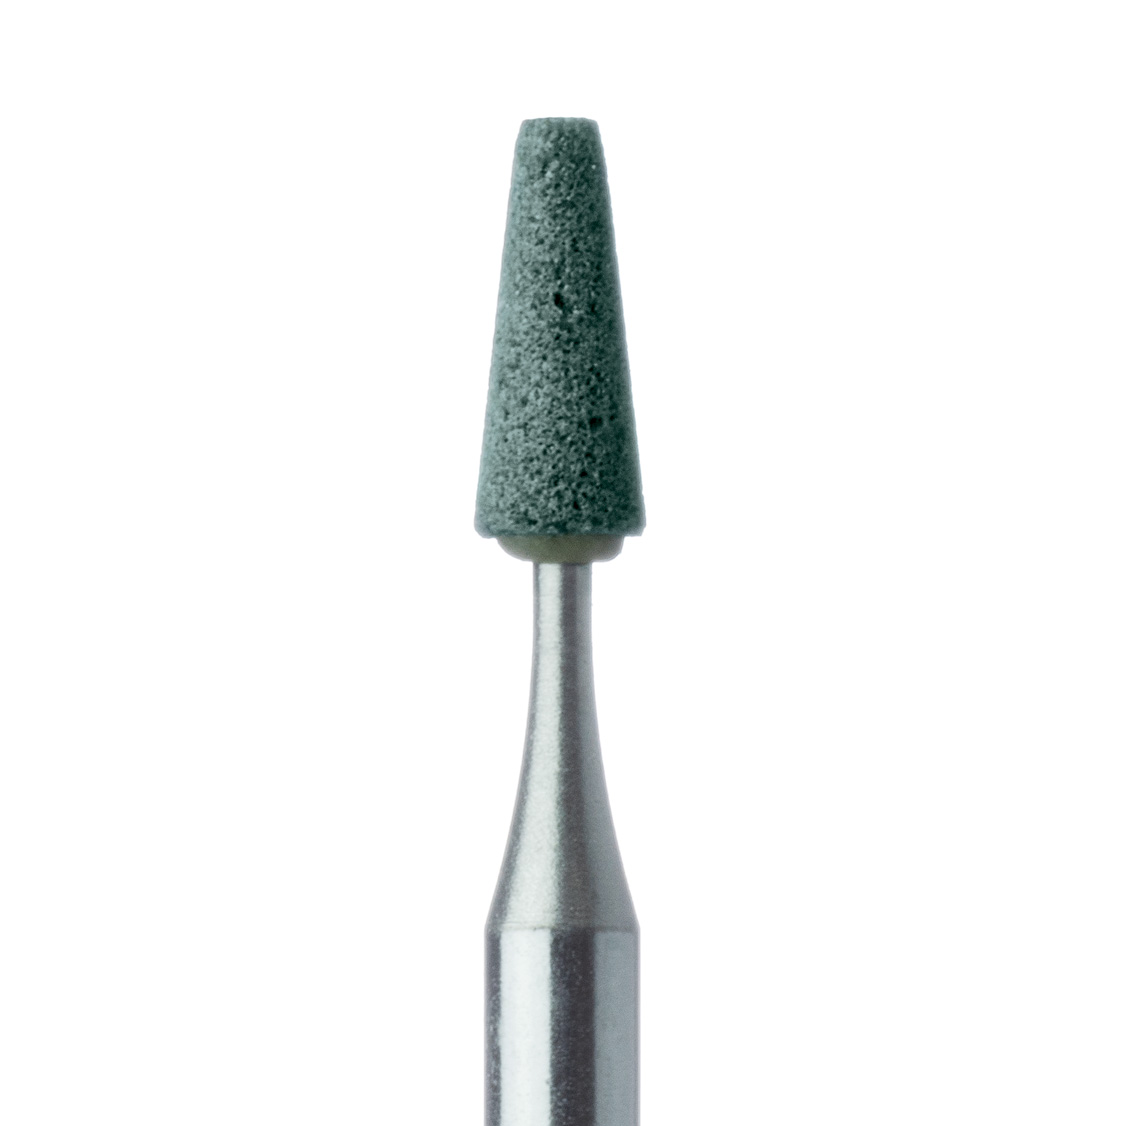 649-025-RA-GRN Abrasive, Green, Tapered Flat End, 2.5mm Ø, Medium, RA